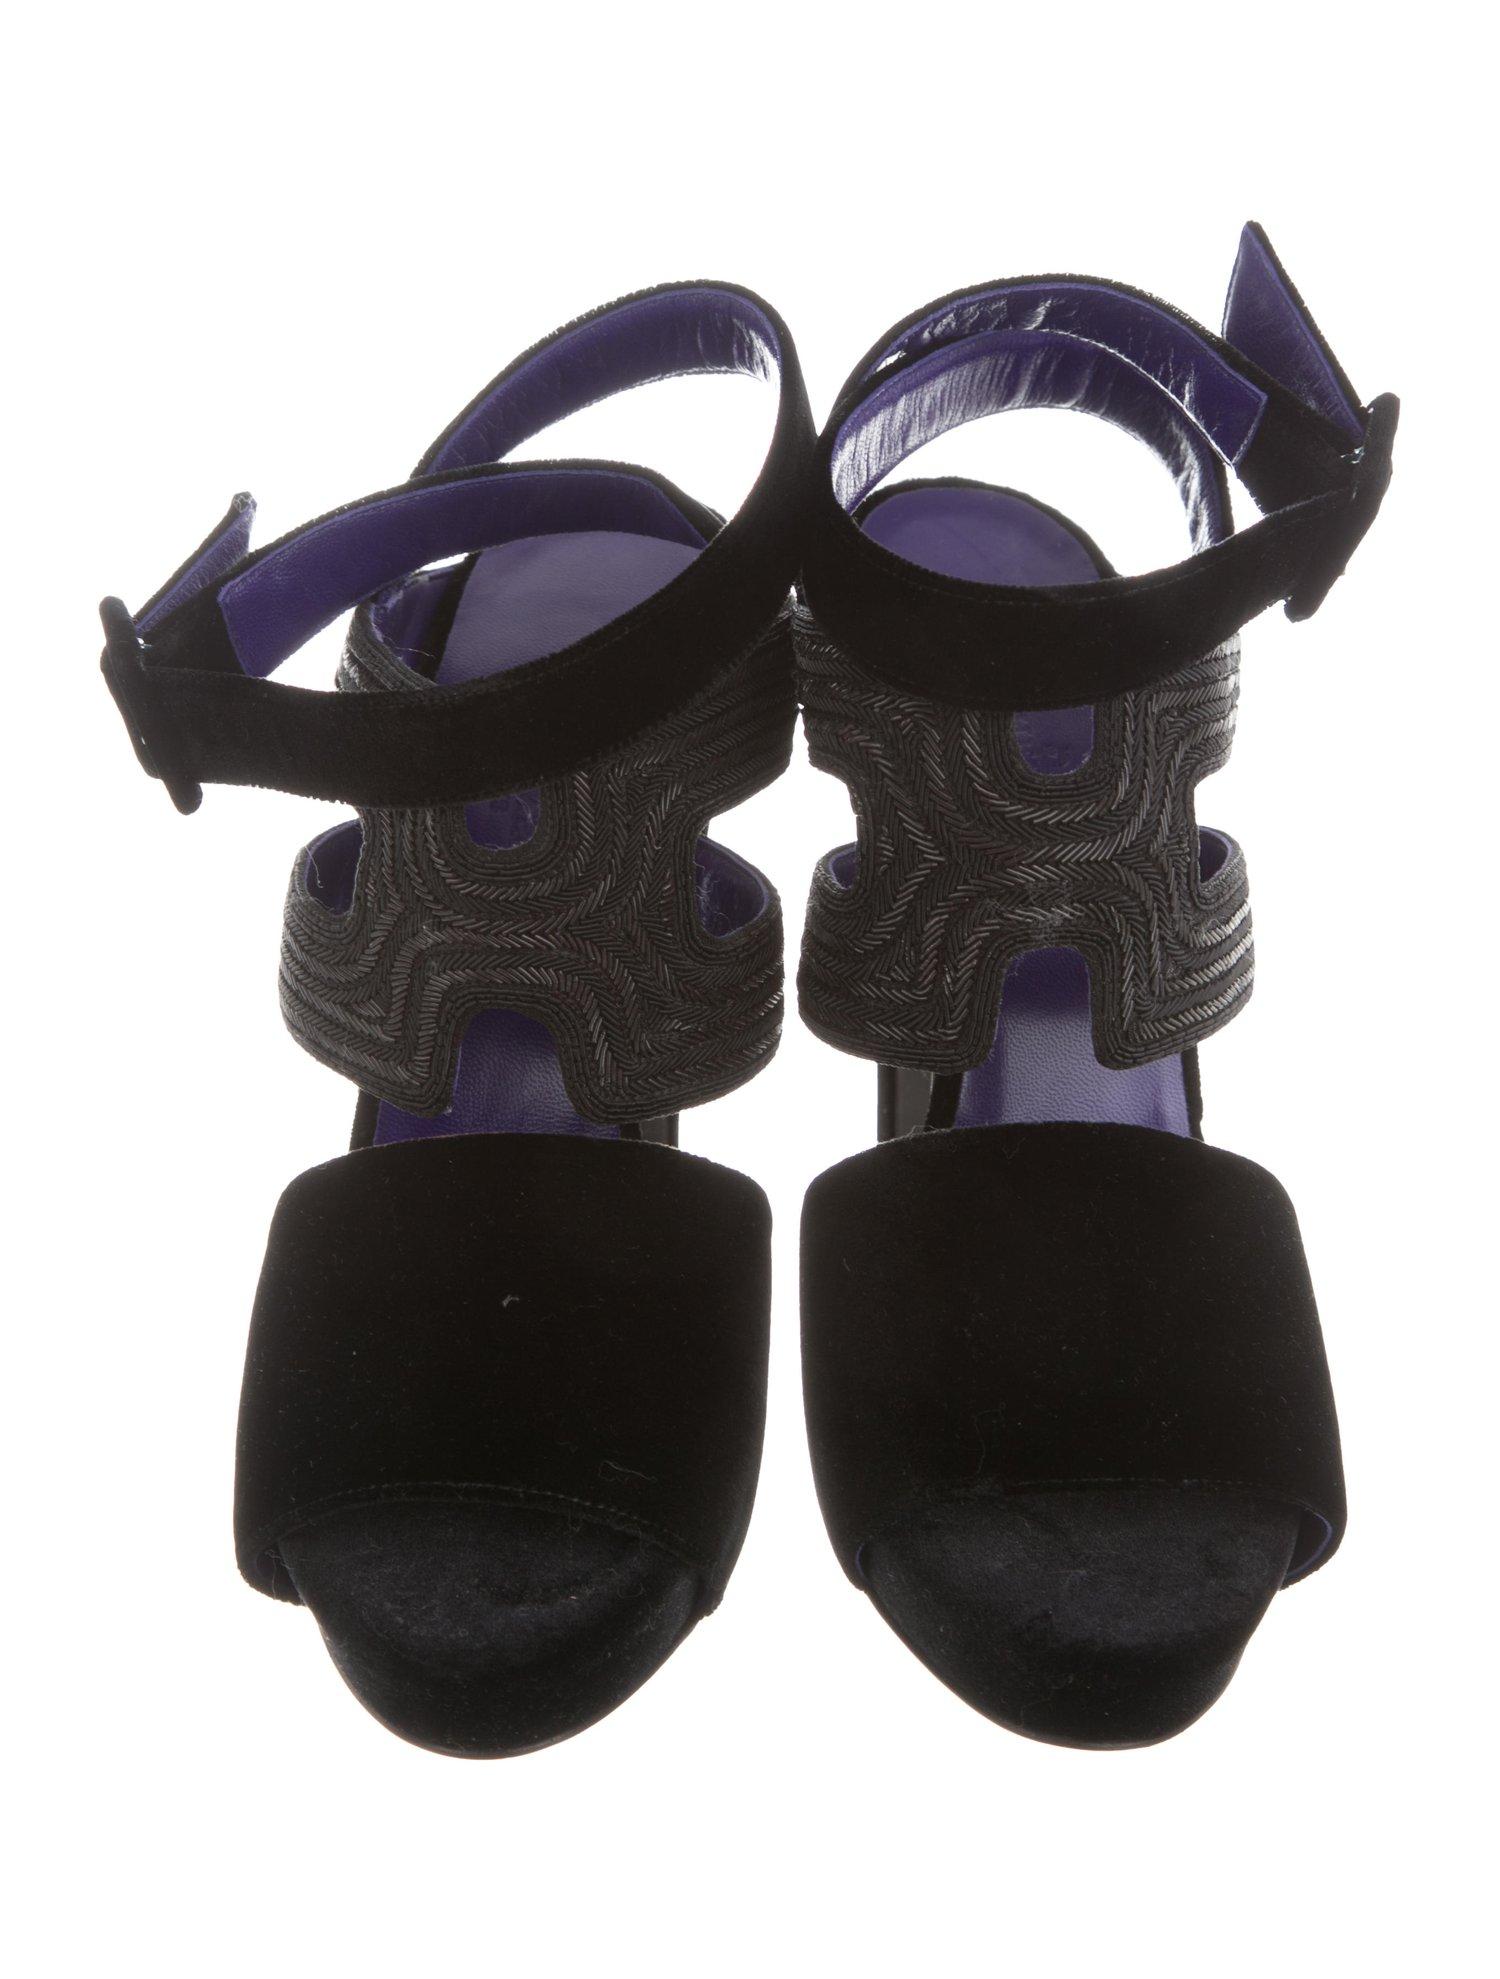 HERMES NEW Black Purple Bead Strappy Evening Sandals Heels

Size IT 39
Velvet
Bead
Ankle strap closure
Made in France
Platform 1